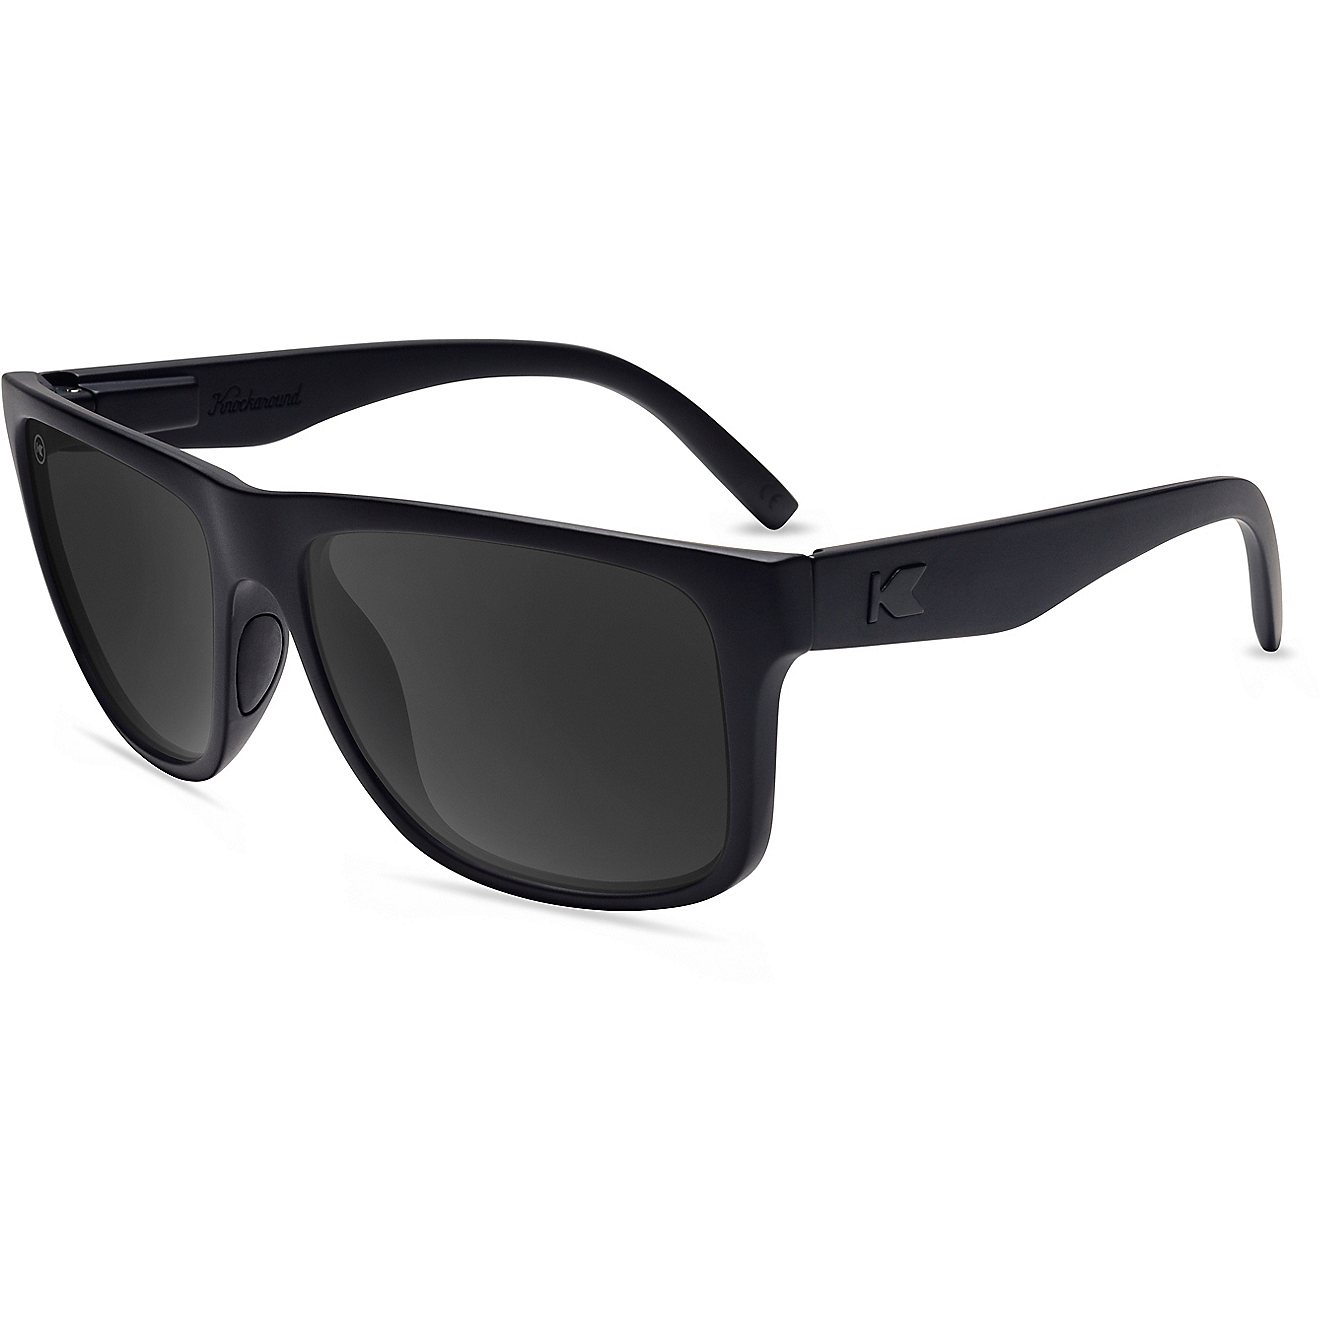 Knockaround Torrey Pines Sport Sunglasses                                                                                        - view number 3